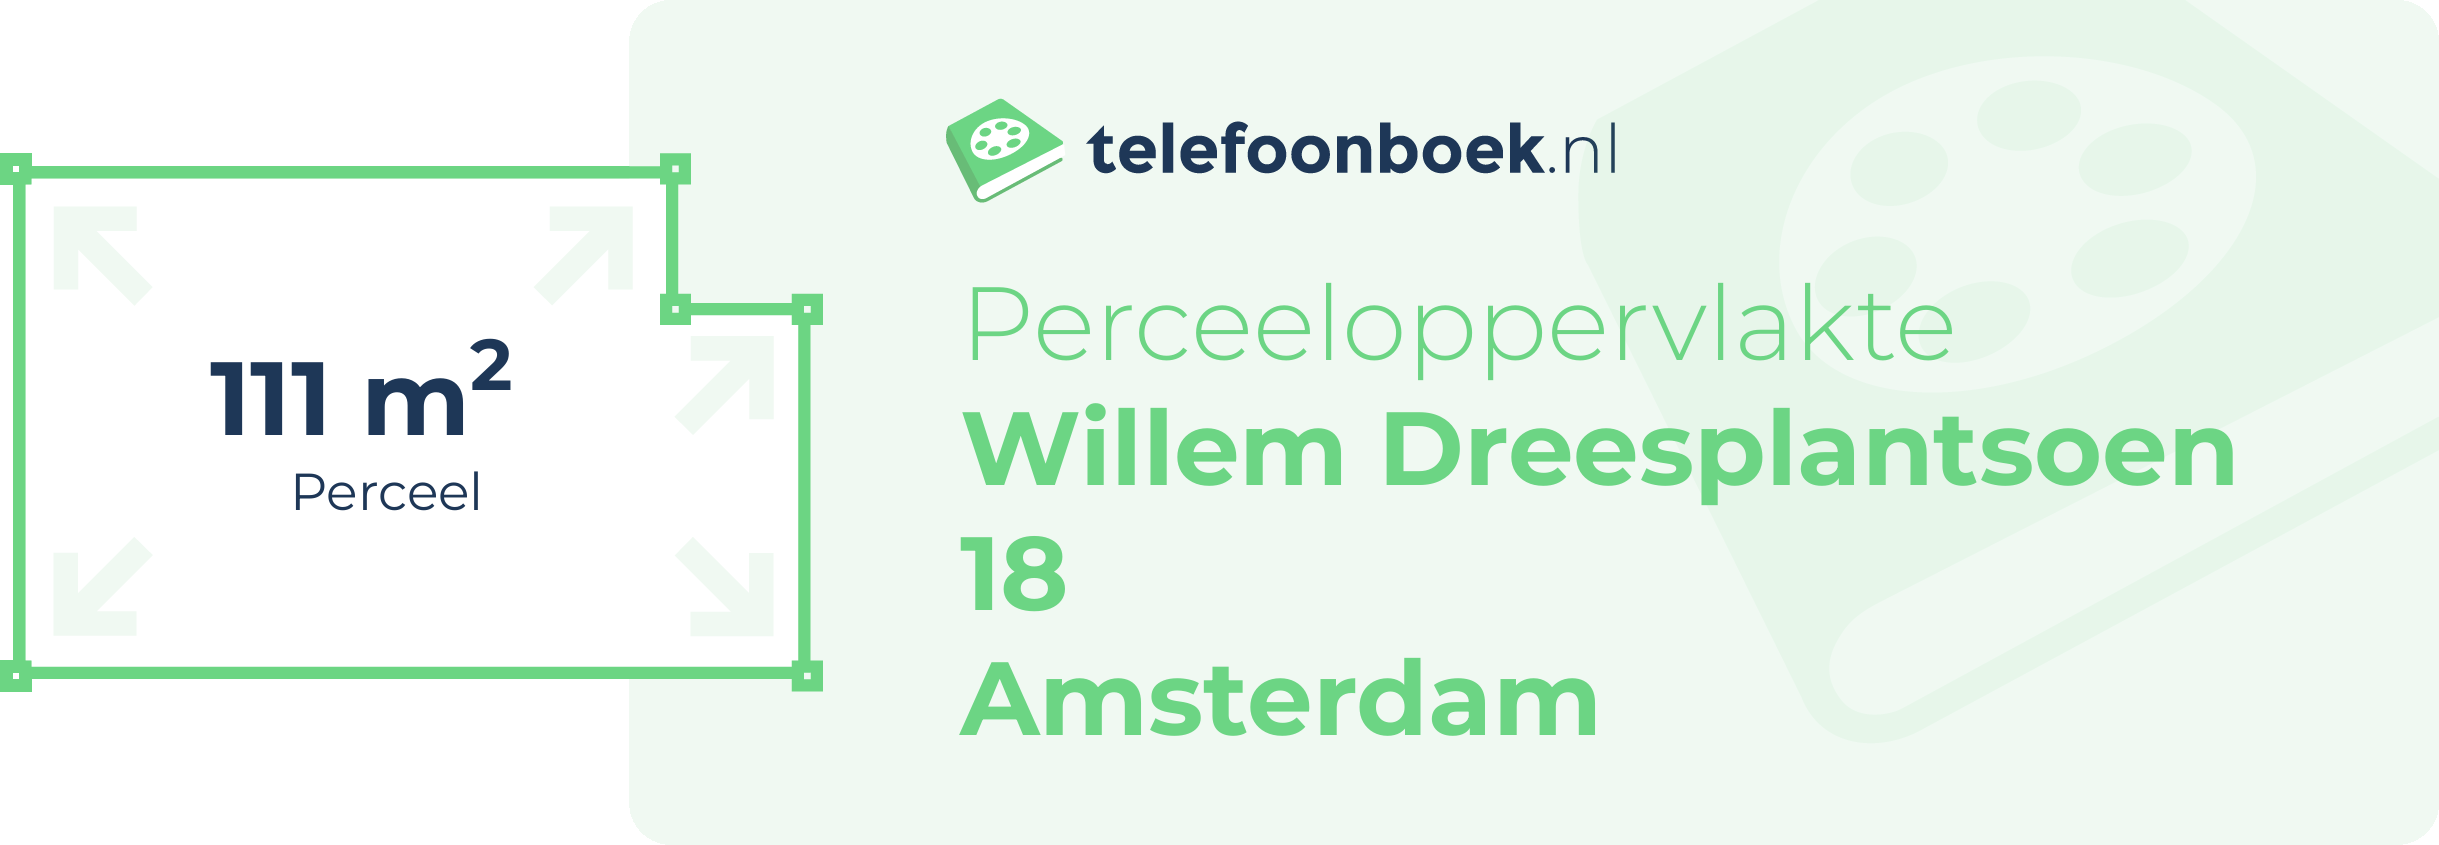 Perceeloppervlakte Willem Dreesplantsoen 18 Amsterdam